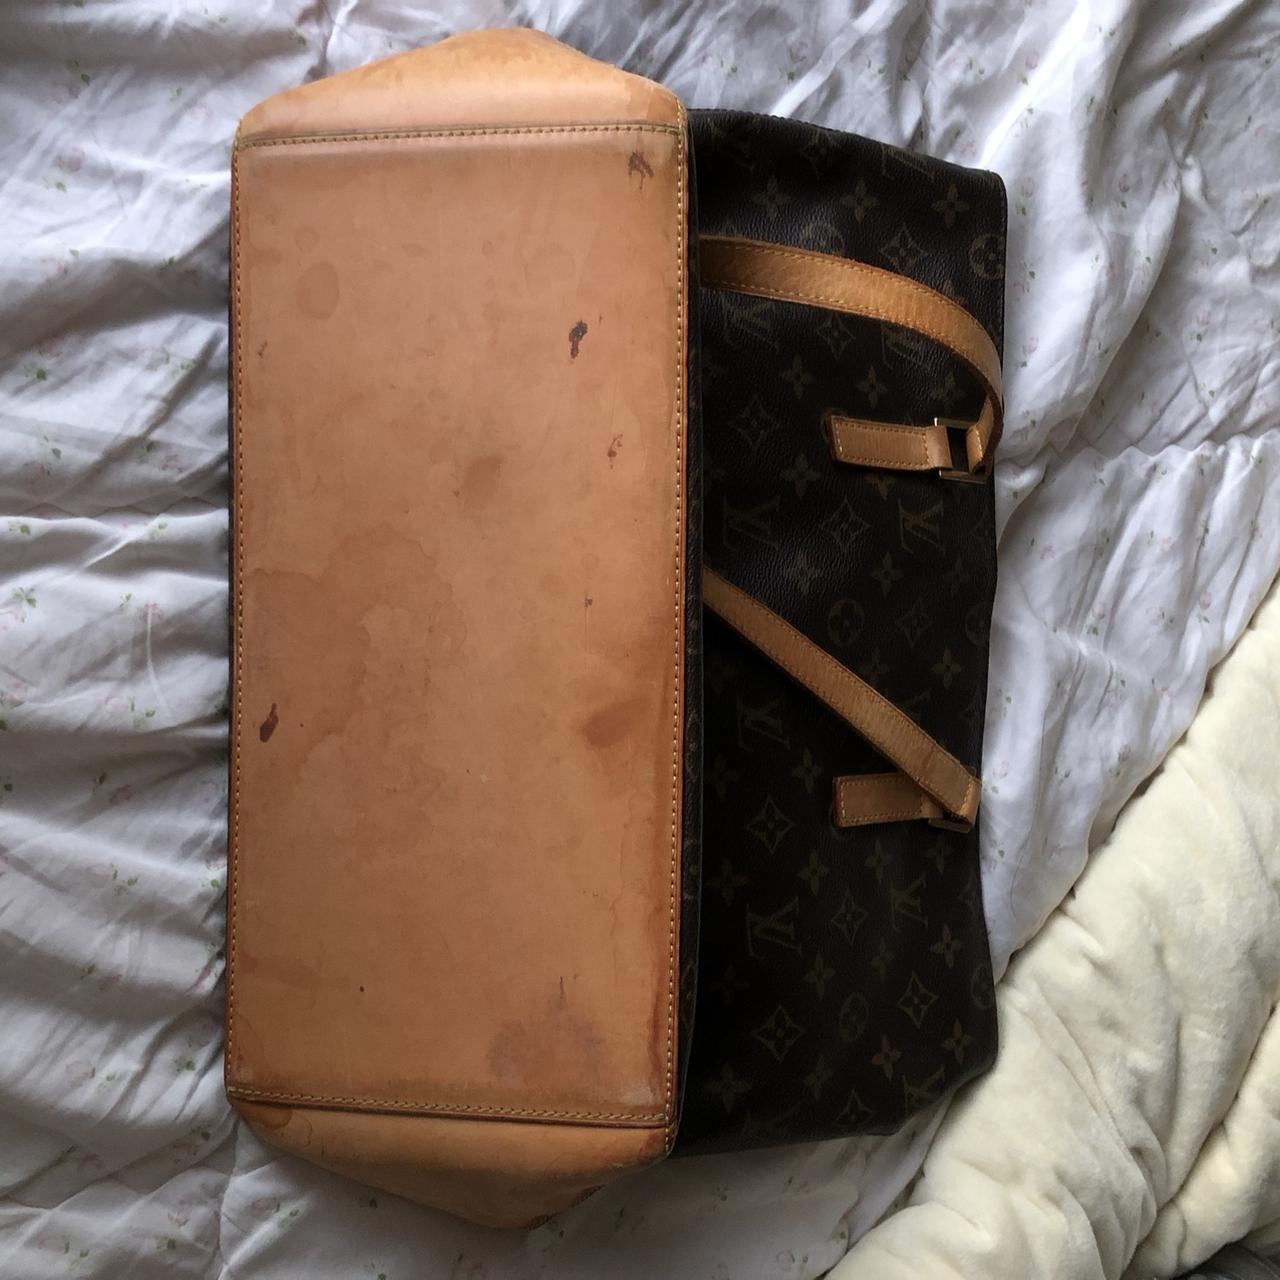 Authentic Louis Vuitton Beverly briefcase style bag - Depop